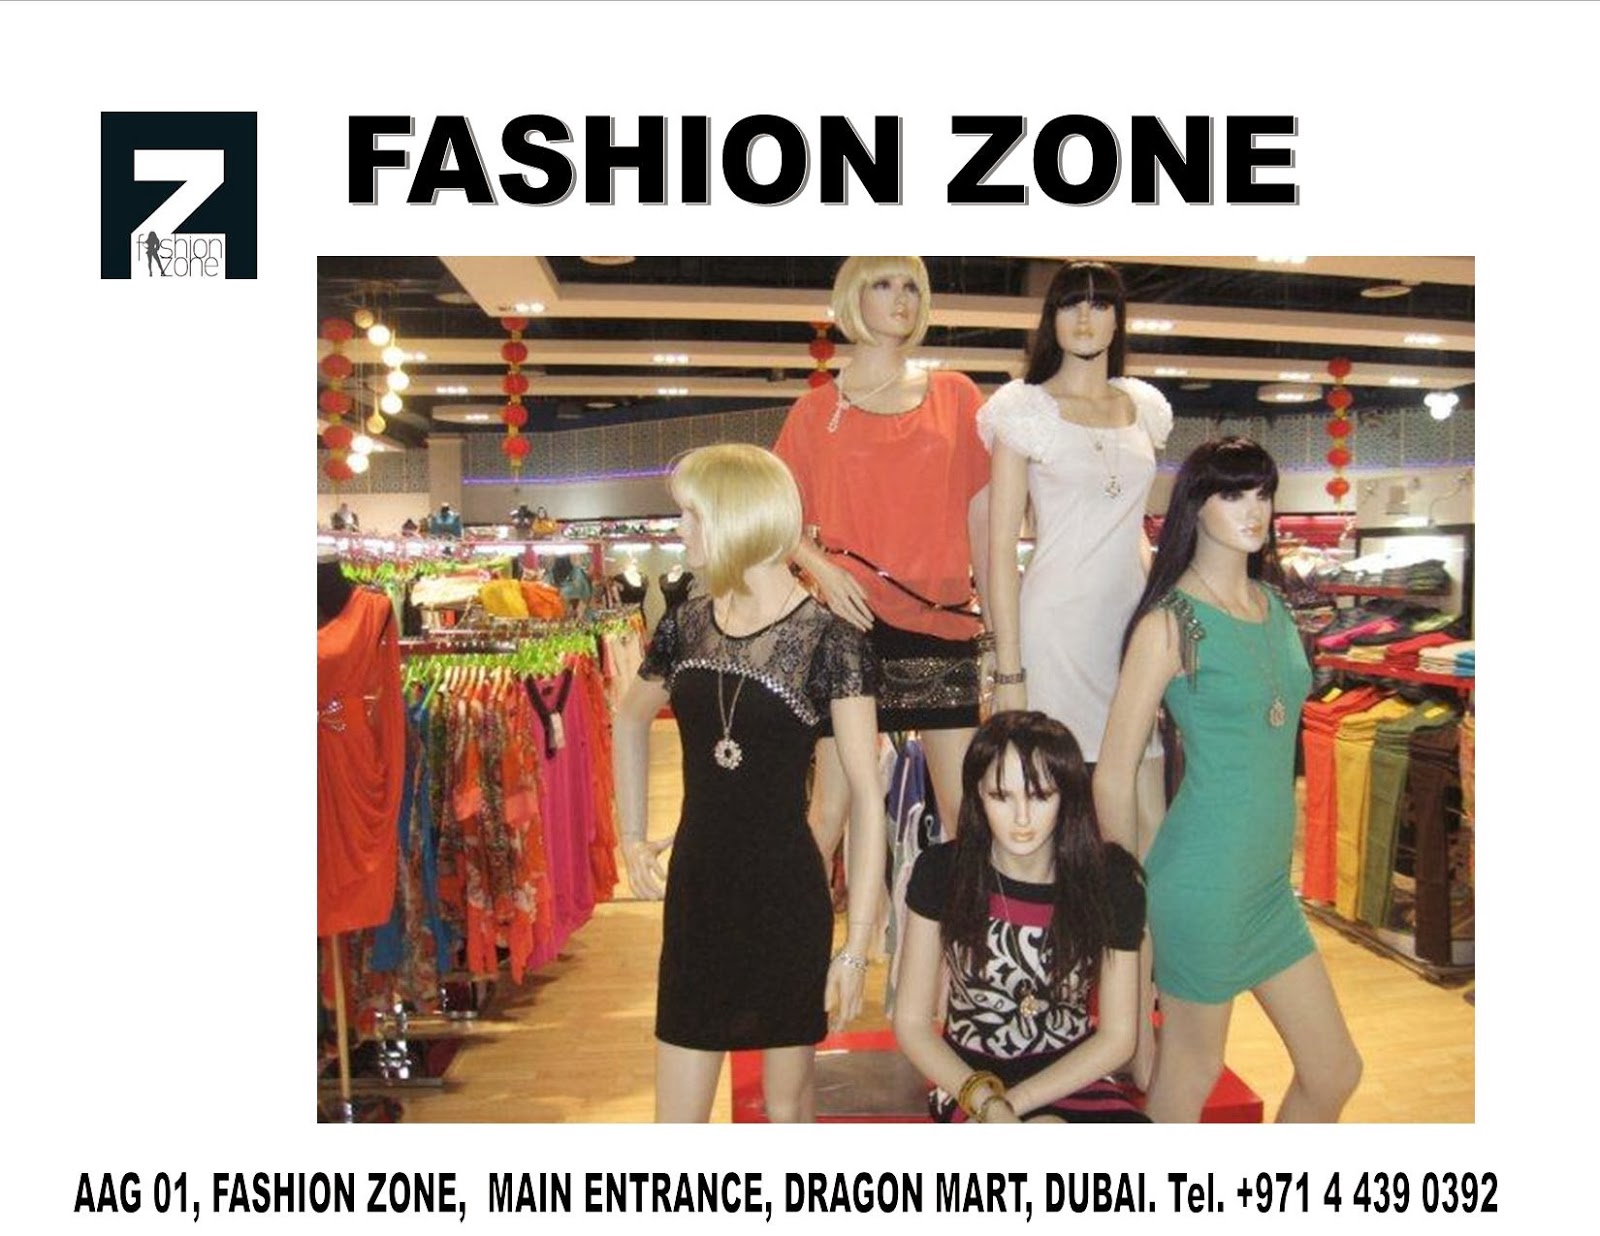 Fashion Zone, AAG01, Dragon Mart, Dubai.